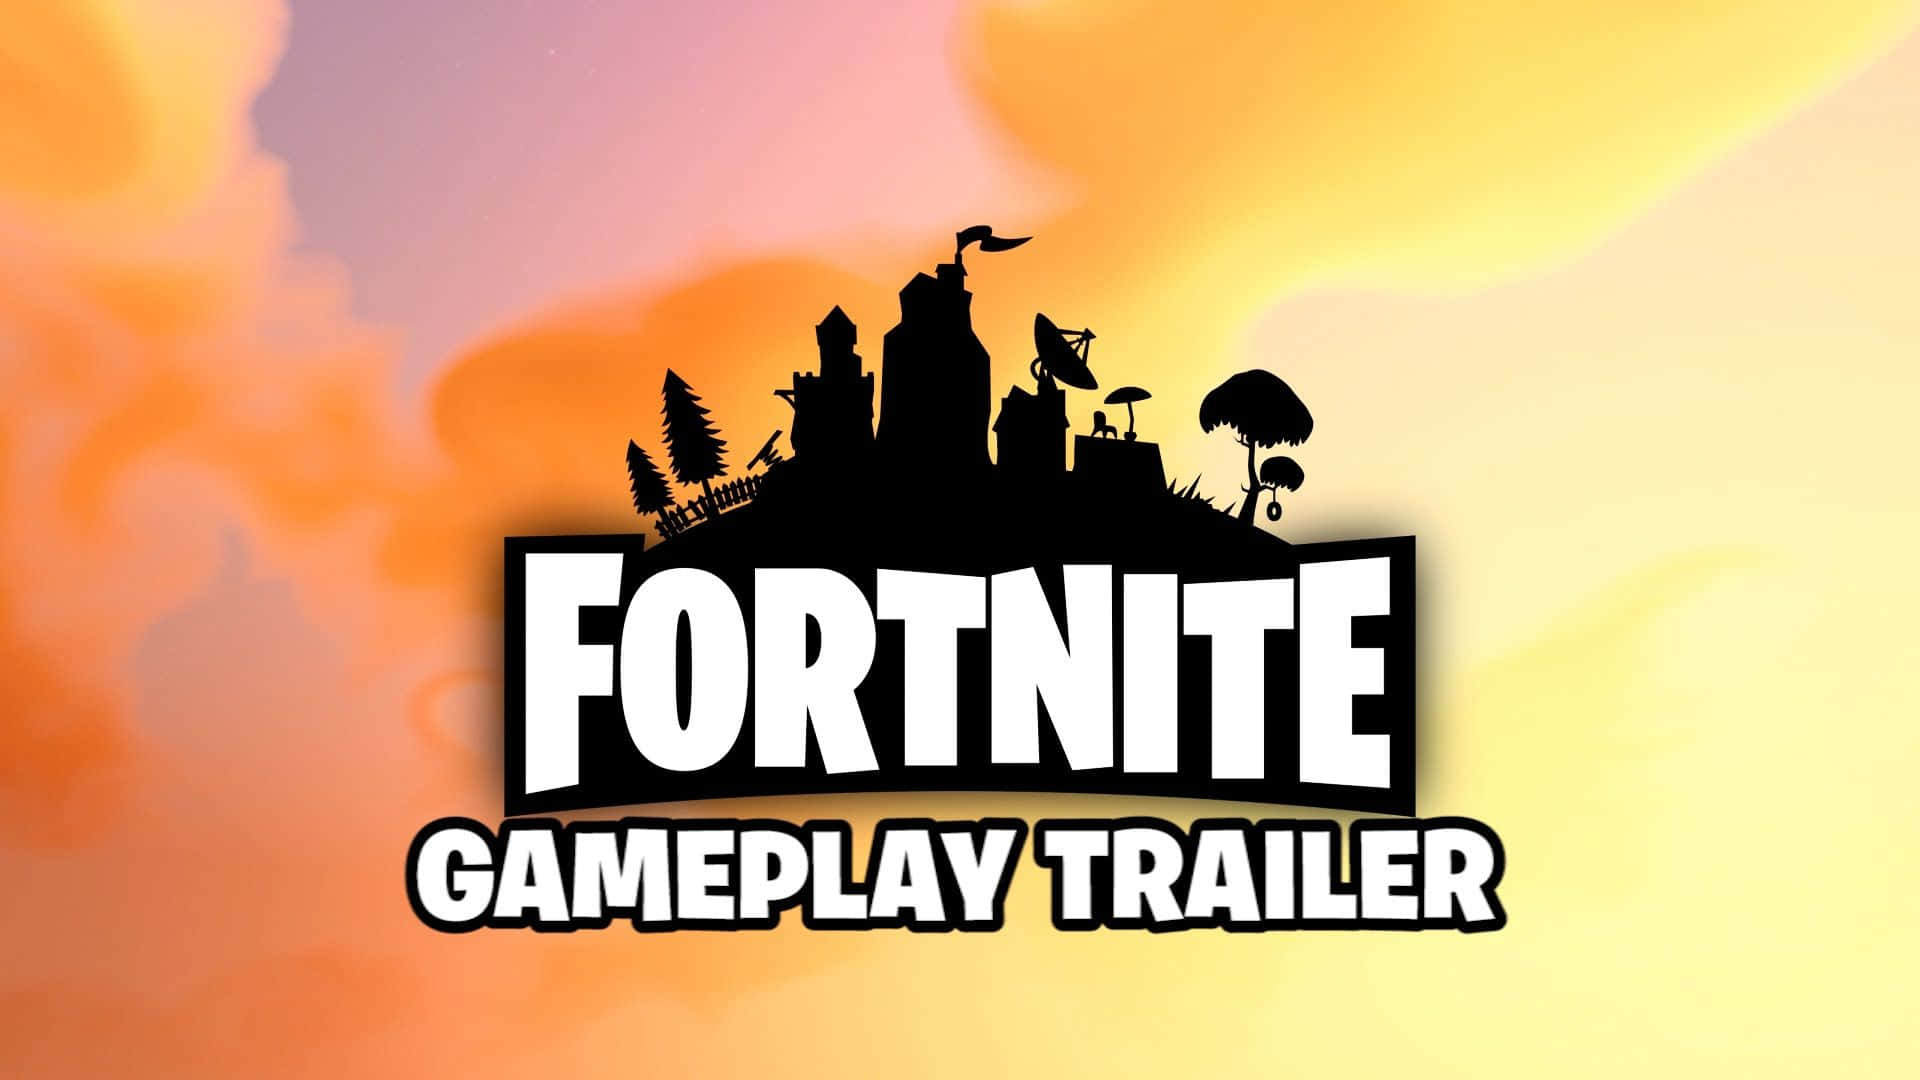 Fortnite Gameplay Trailer - A Fortnite Gameplay Trailer Wallpaper